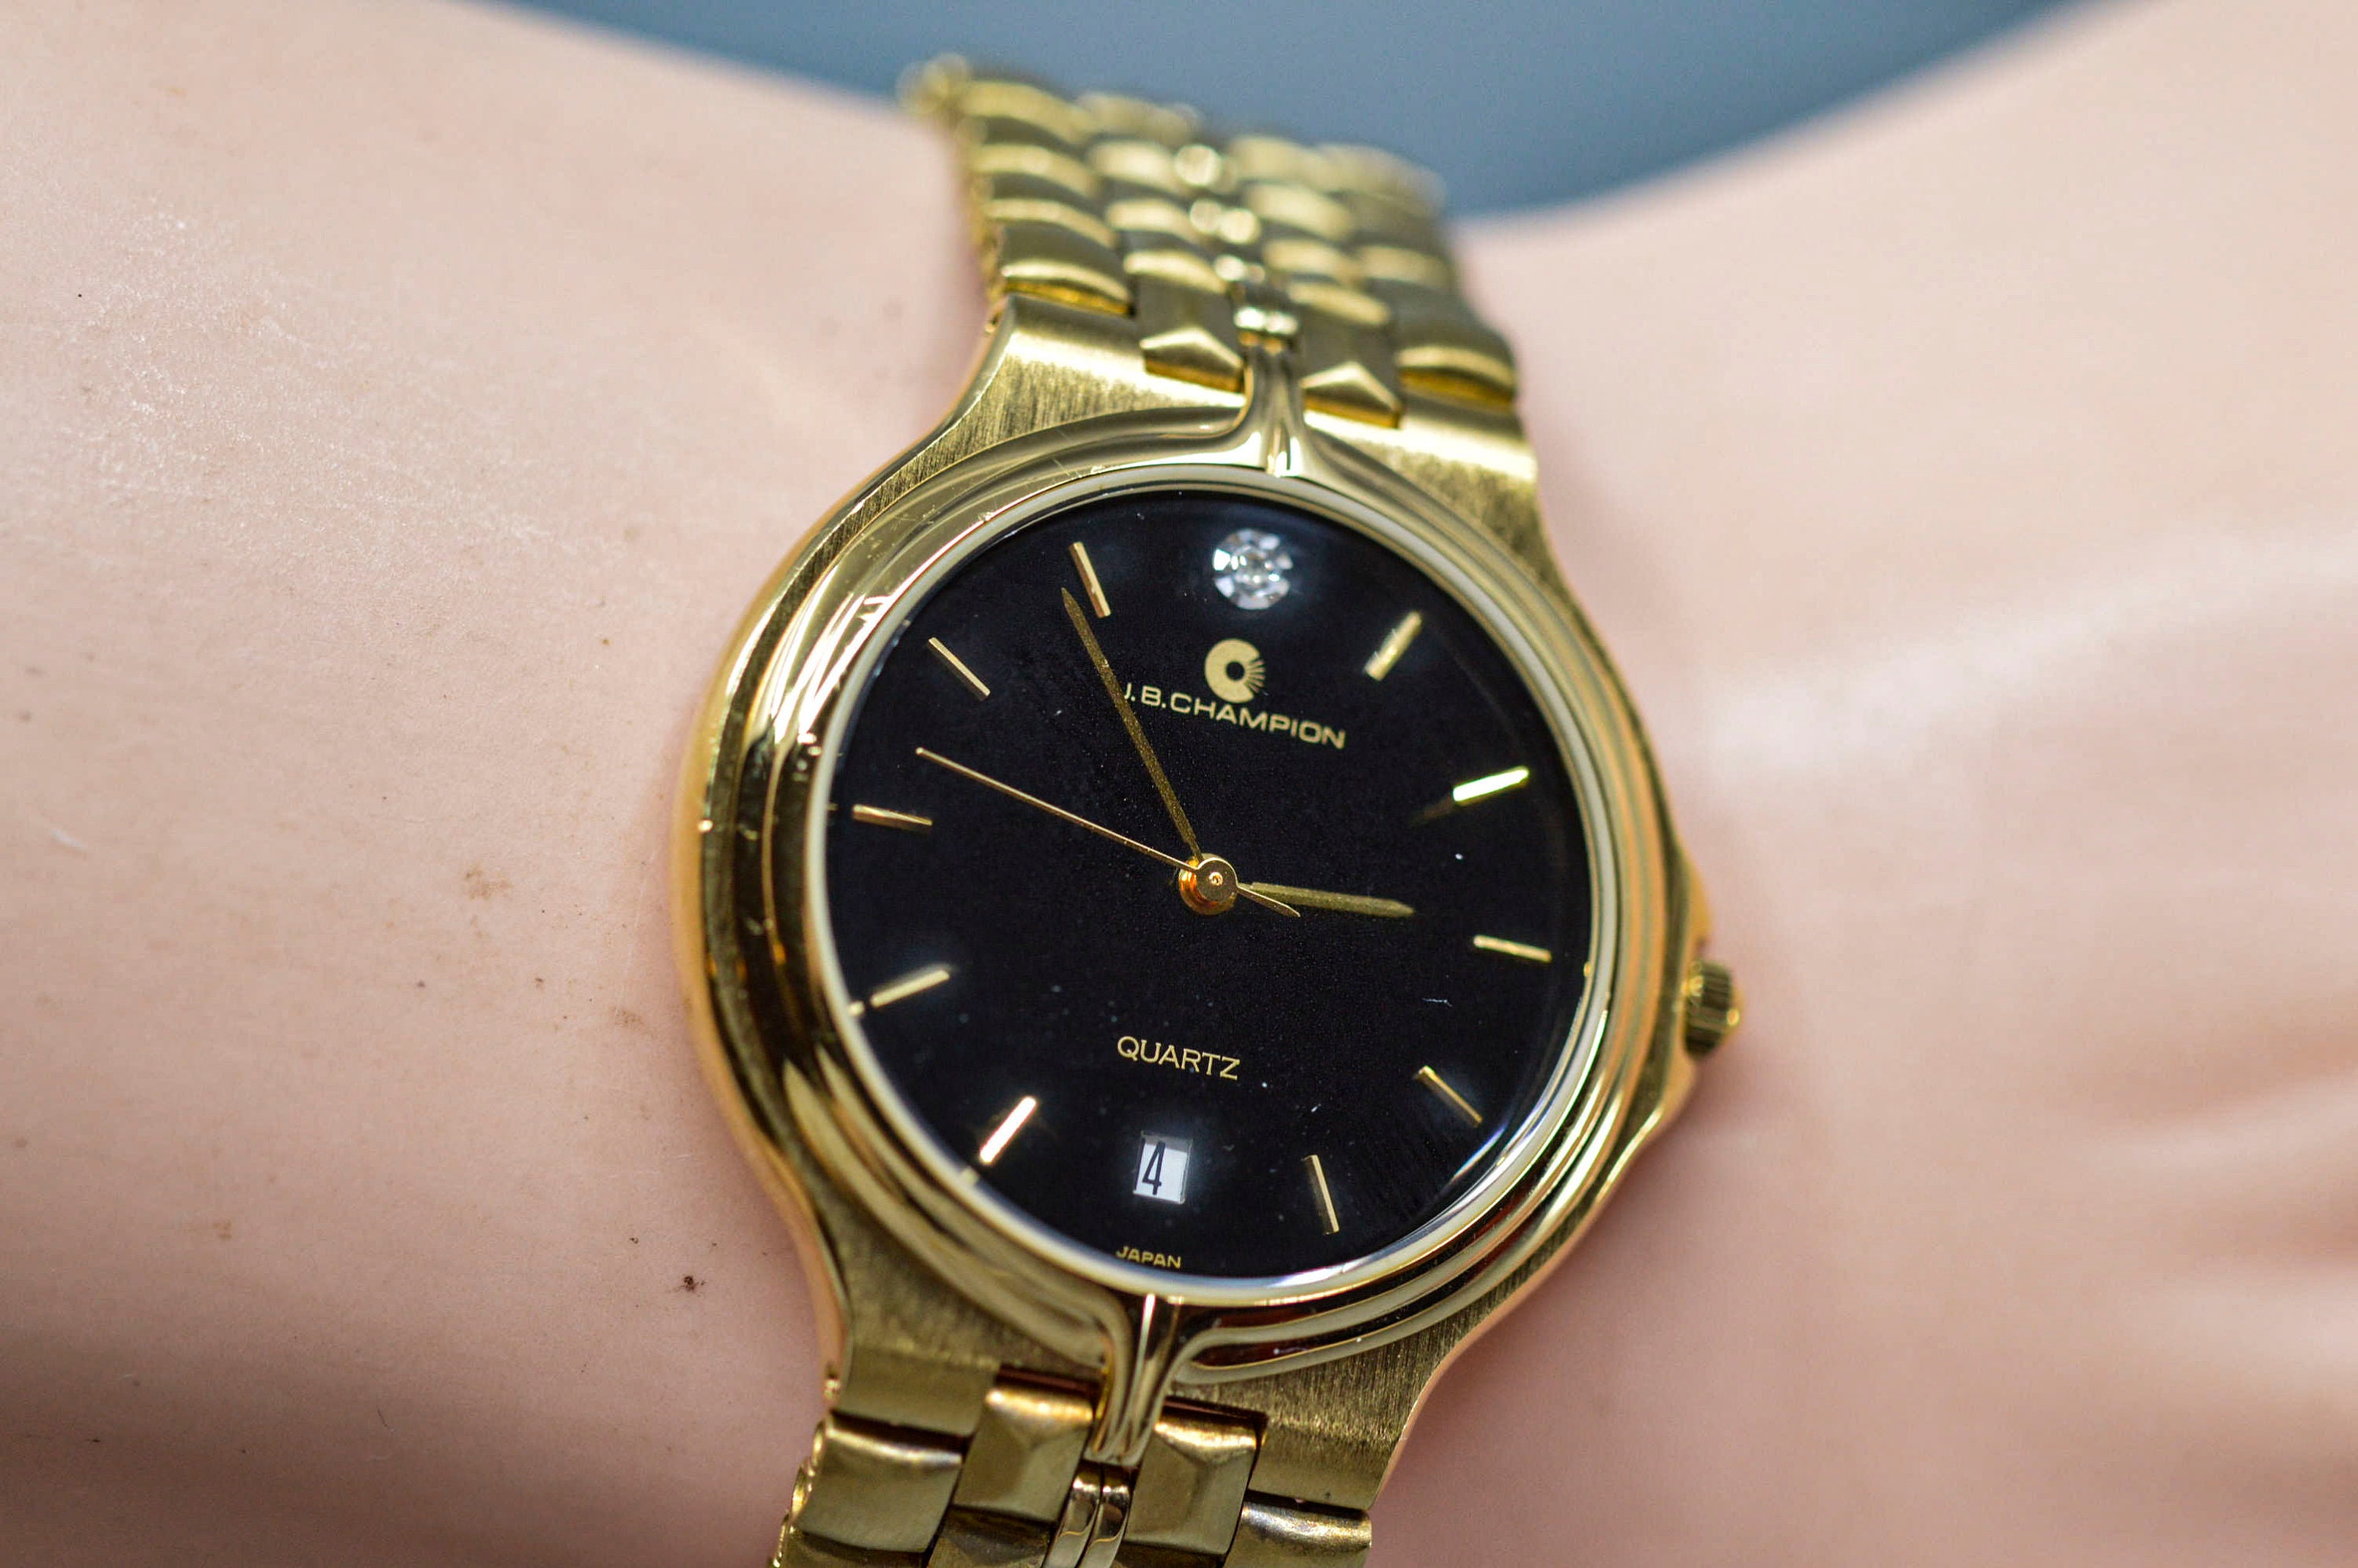 J.B. Champion Gold Tone With Black Dial Quartz Wrist Watch -